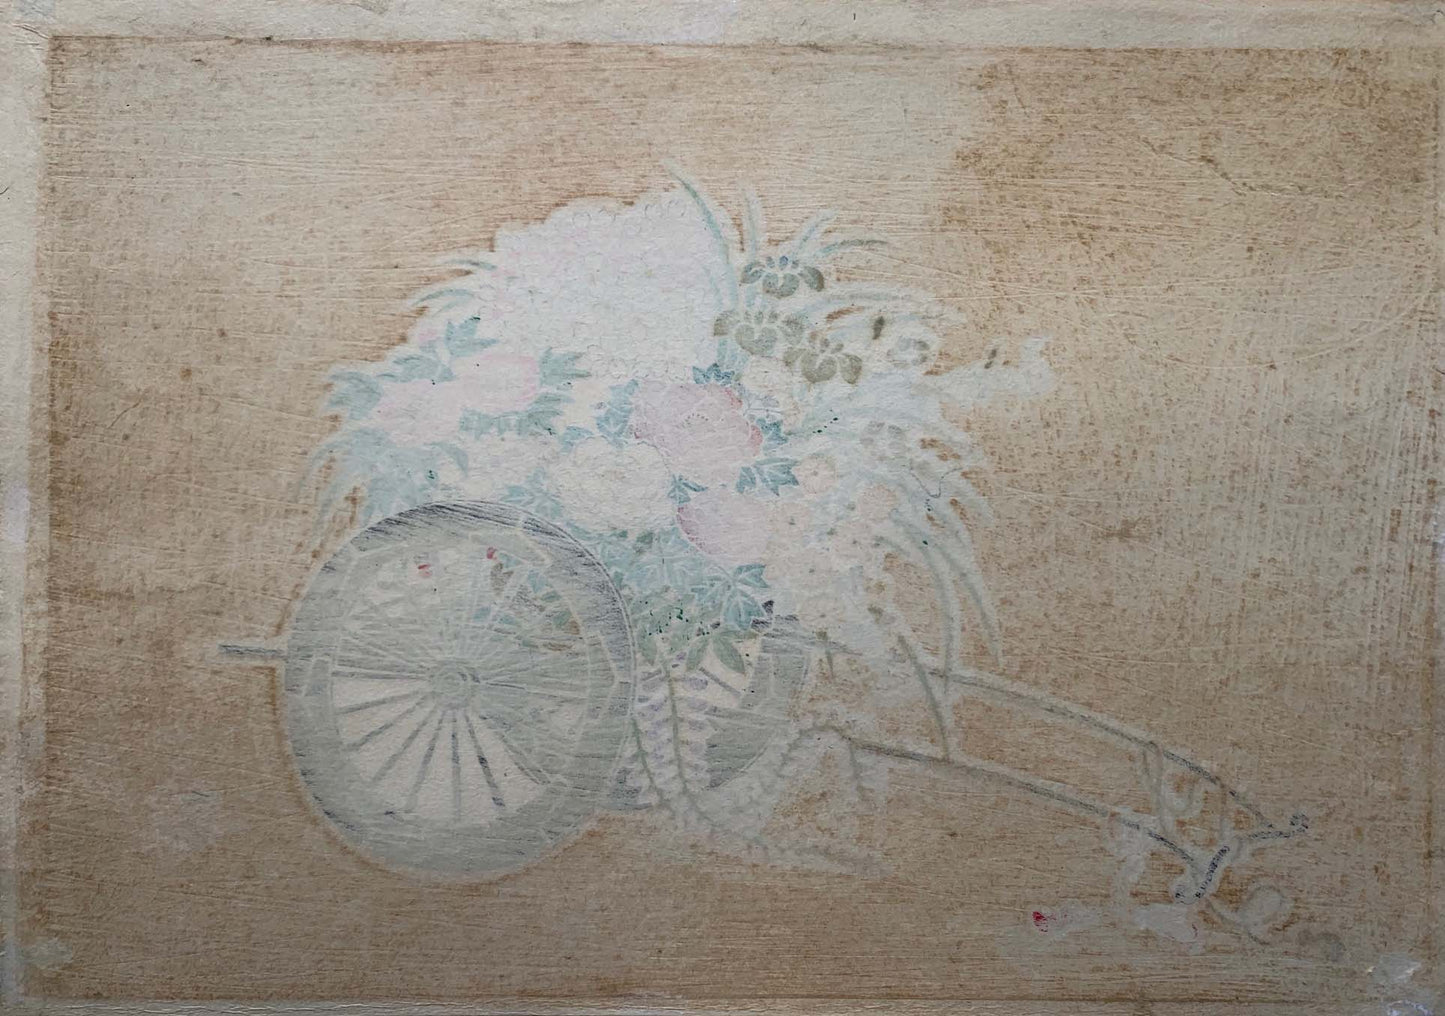 estampe japonaise shin hanga de tasaburo takahashi chariot de fleur printemps, dos de l'estampe